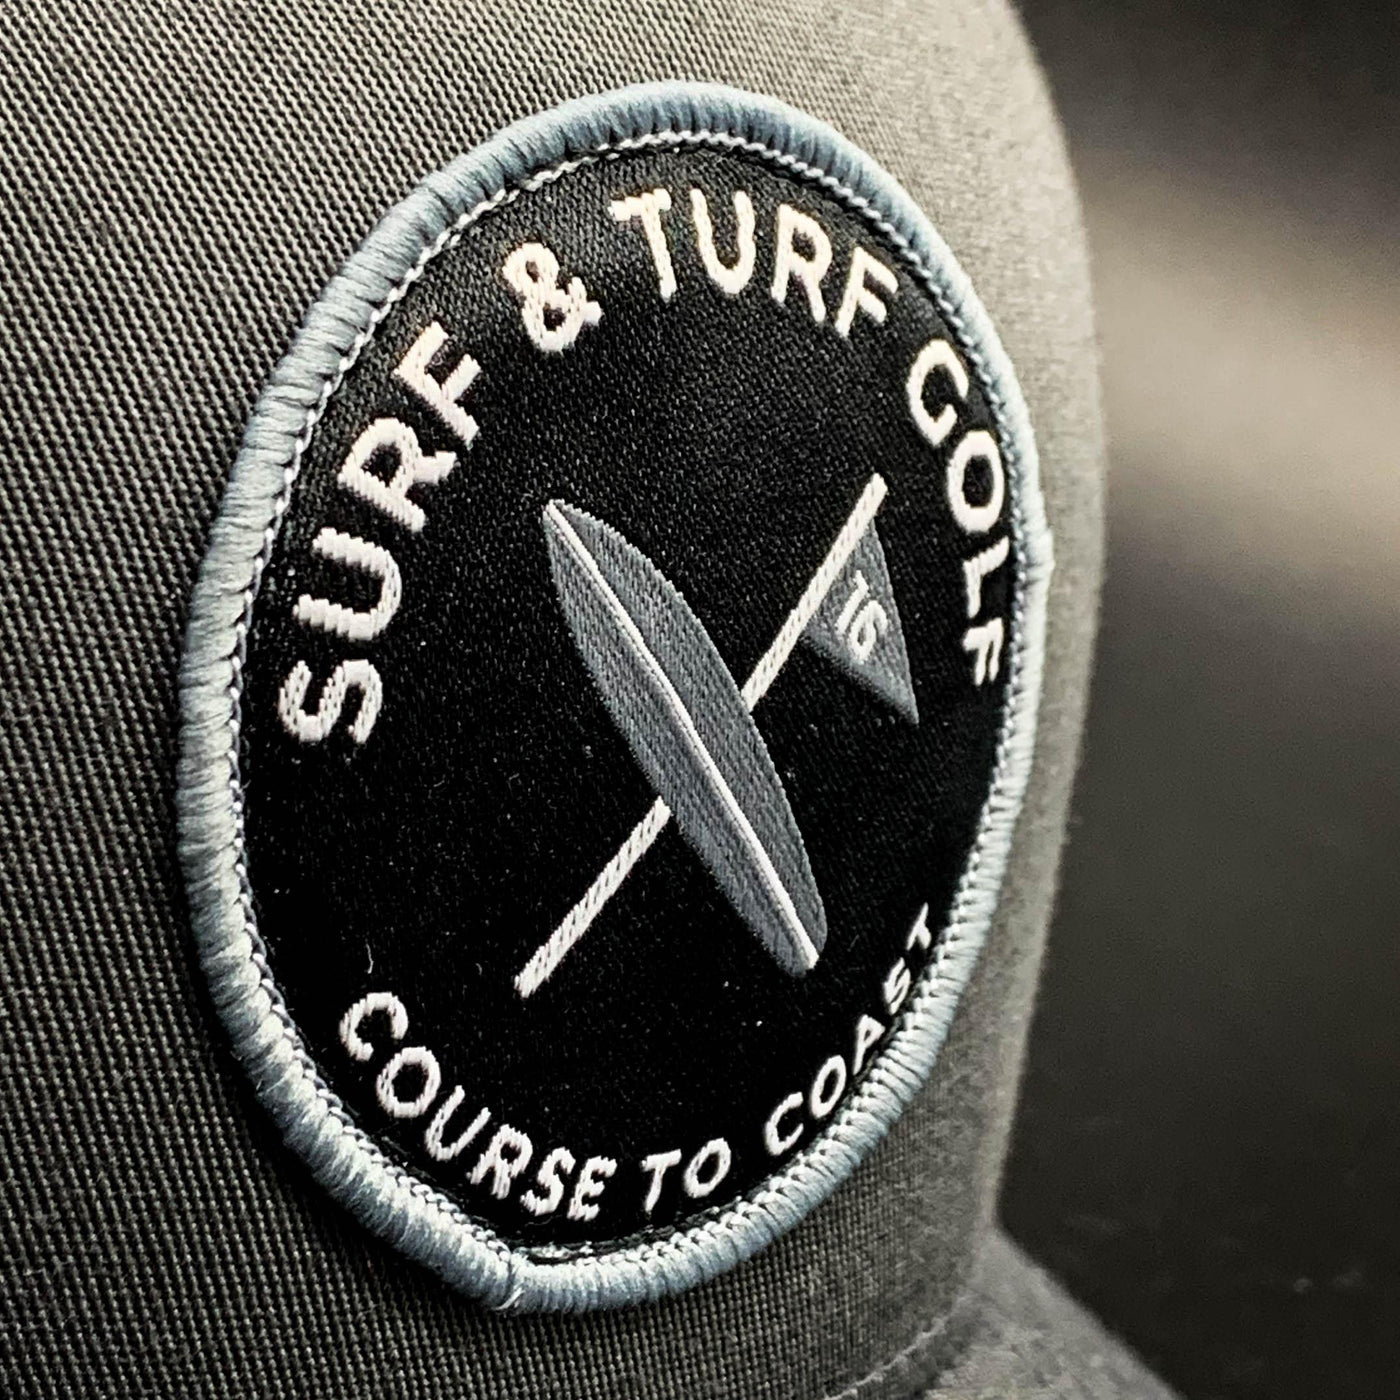 Course to Coast 8 - Surf & Turf Golf